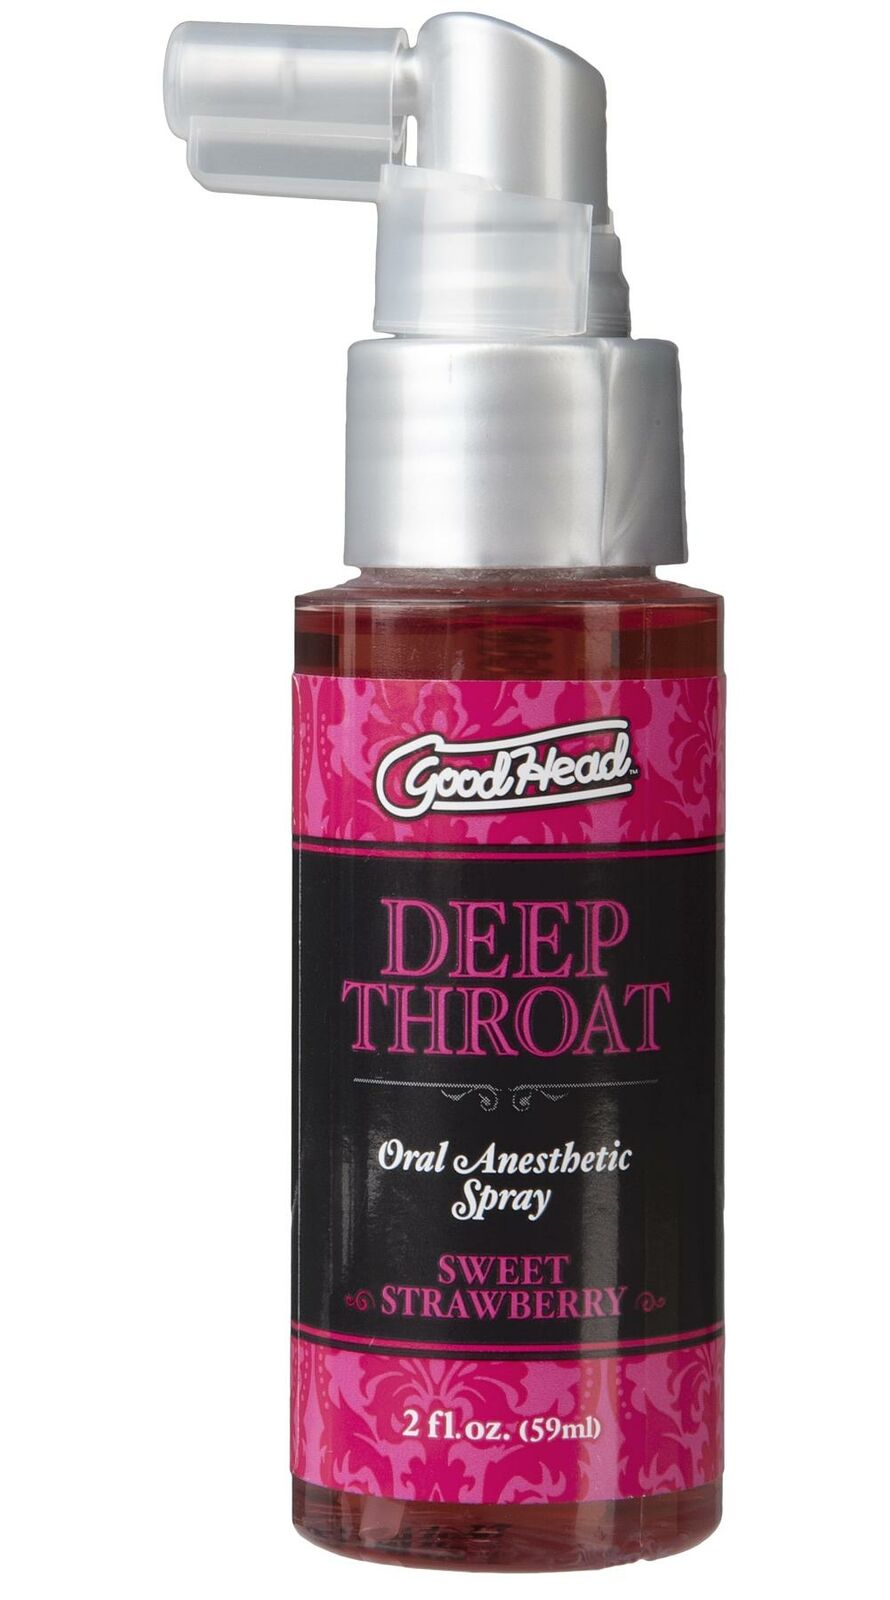 Doc Johnson Goodhead - 2 Oz Deep Throat Spray - Sweet Strawberry